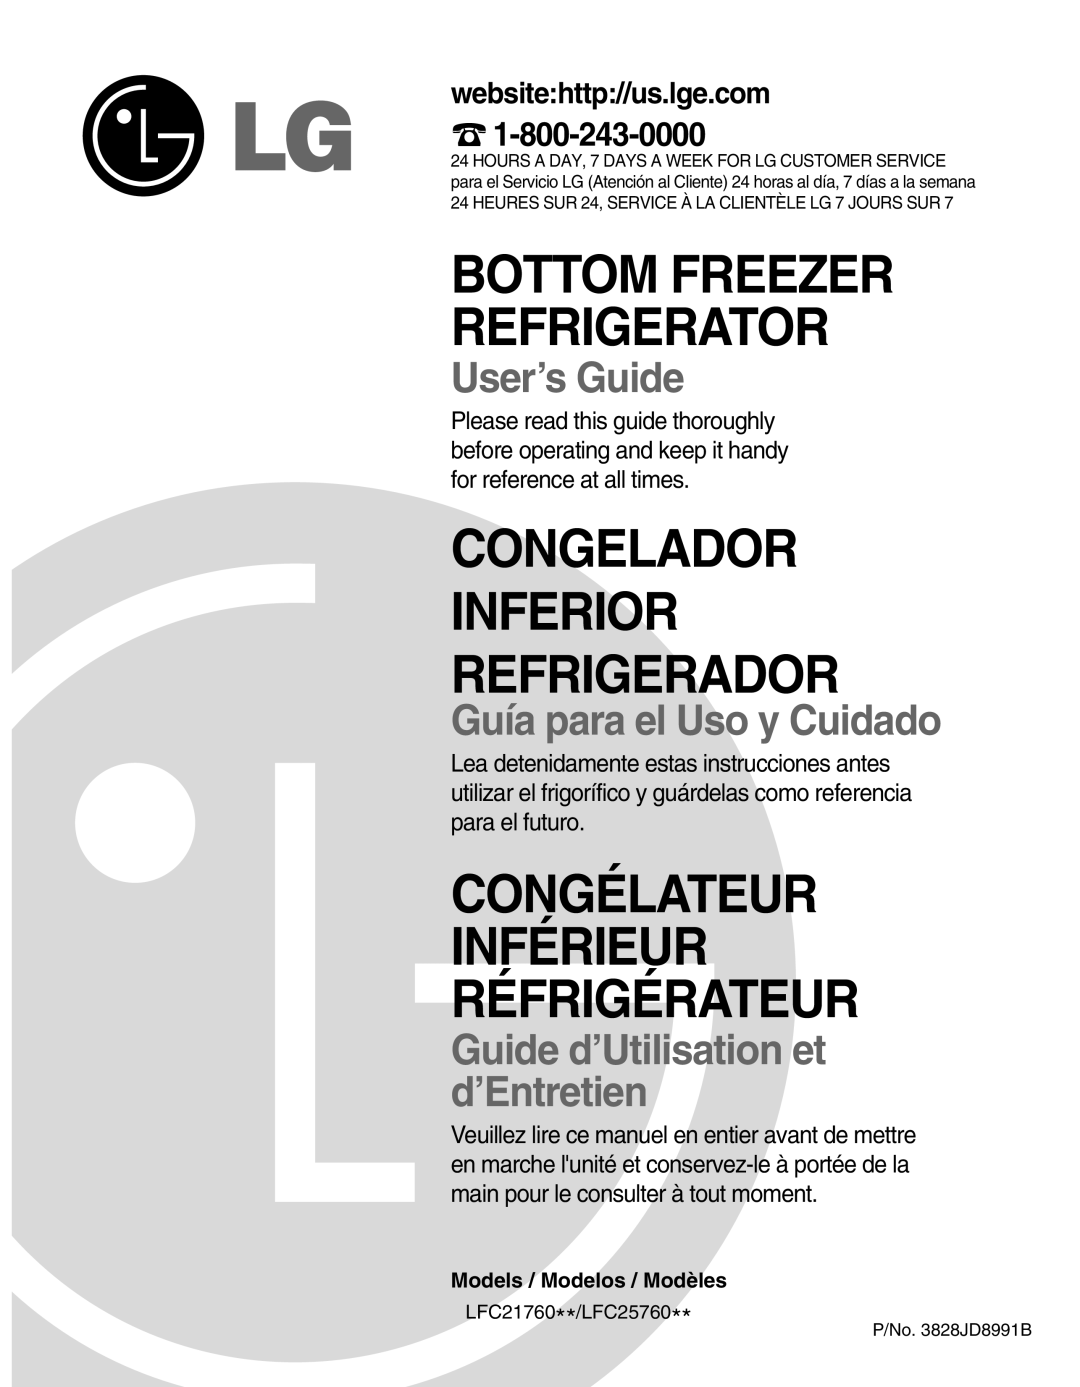 LG Electronics LFC25760 manual Congelador Inferior Refrigerador, Congélateur Inférieur Réfrigérateur, User’s Guide 